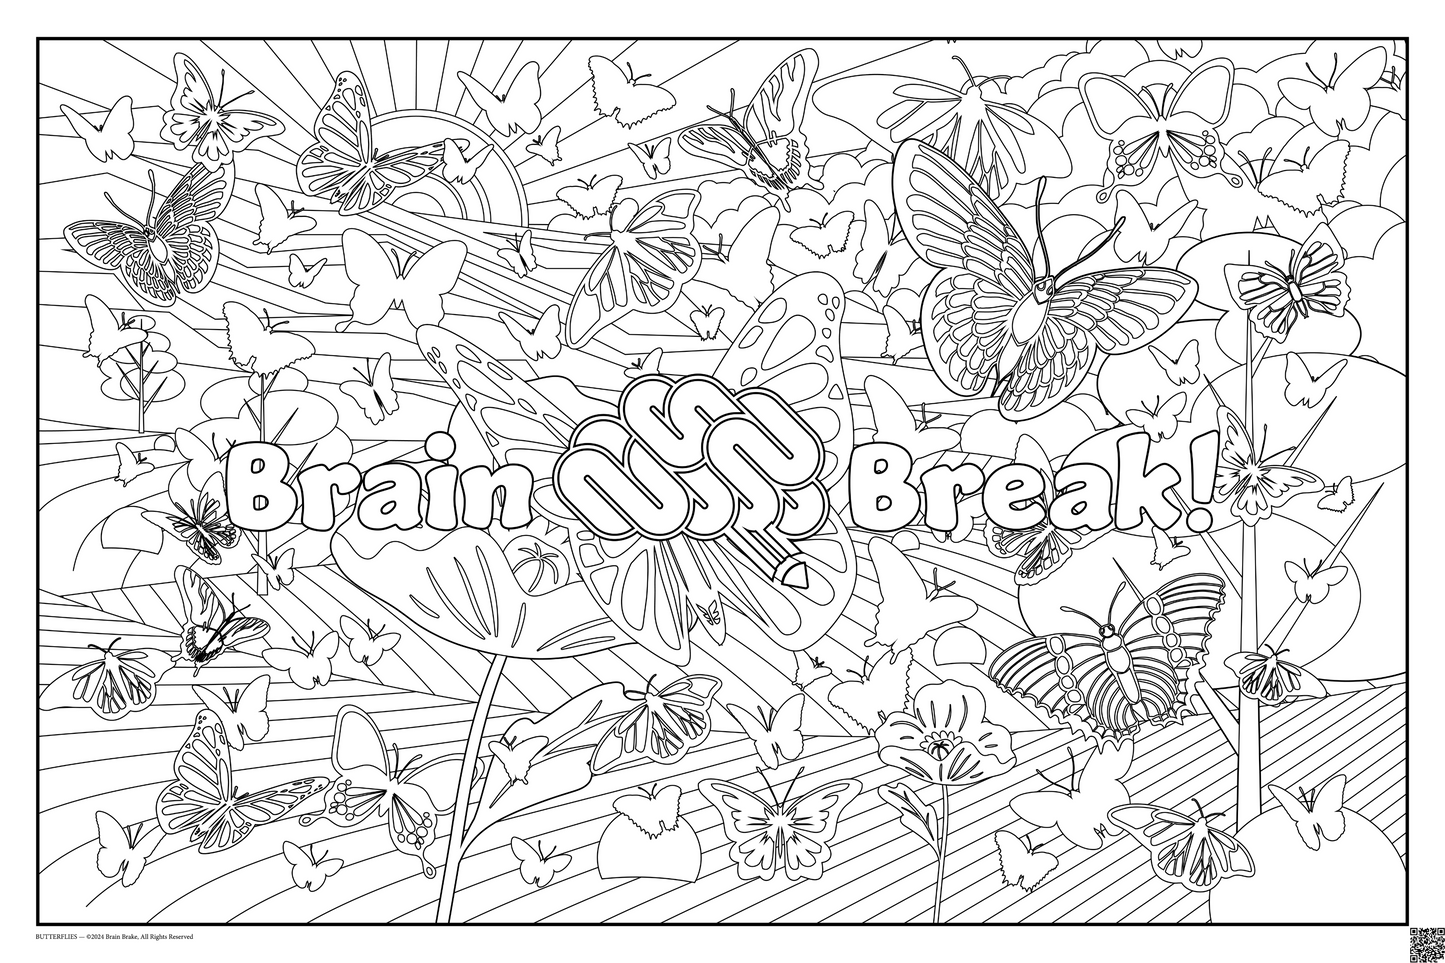 Calming Corner: Brain Break